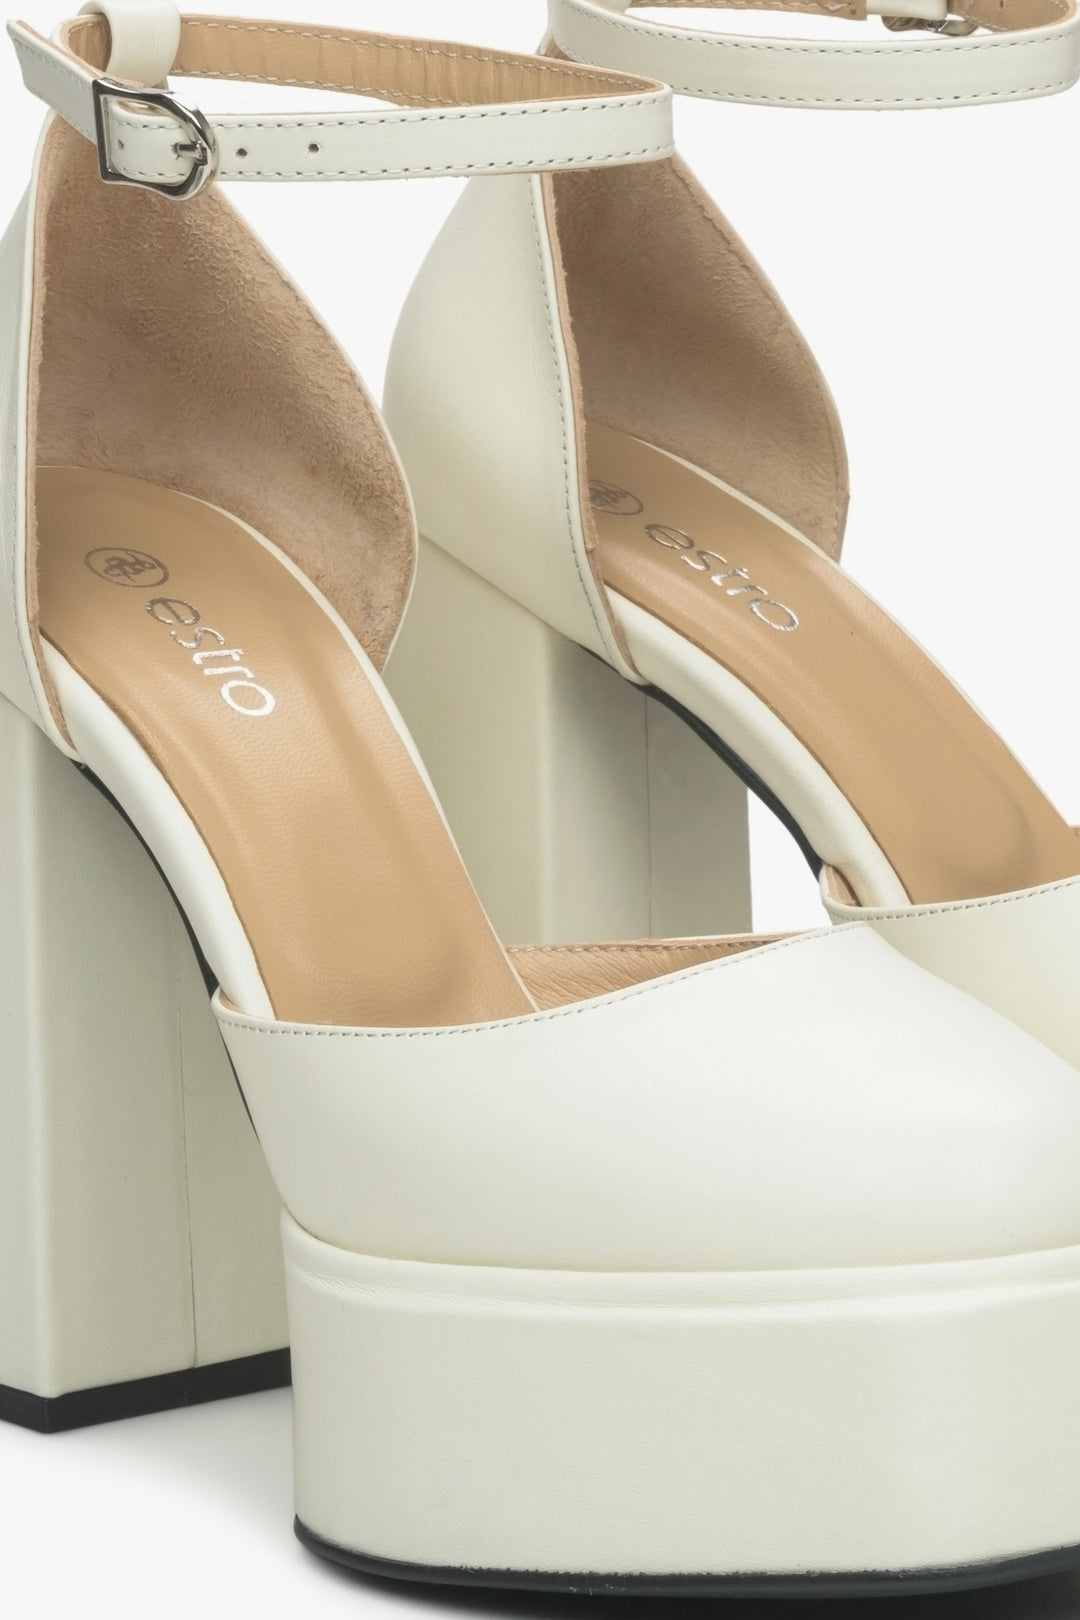 Women's light beige leather heeled sandals.